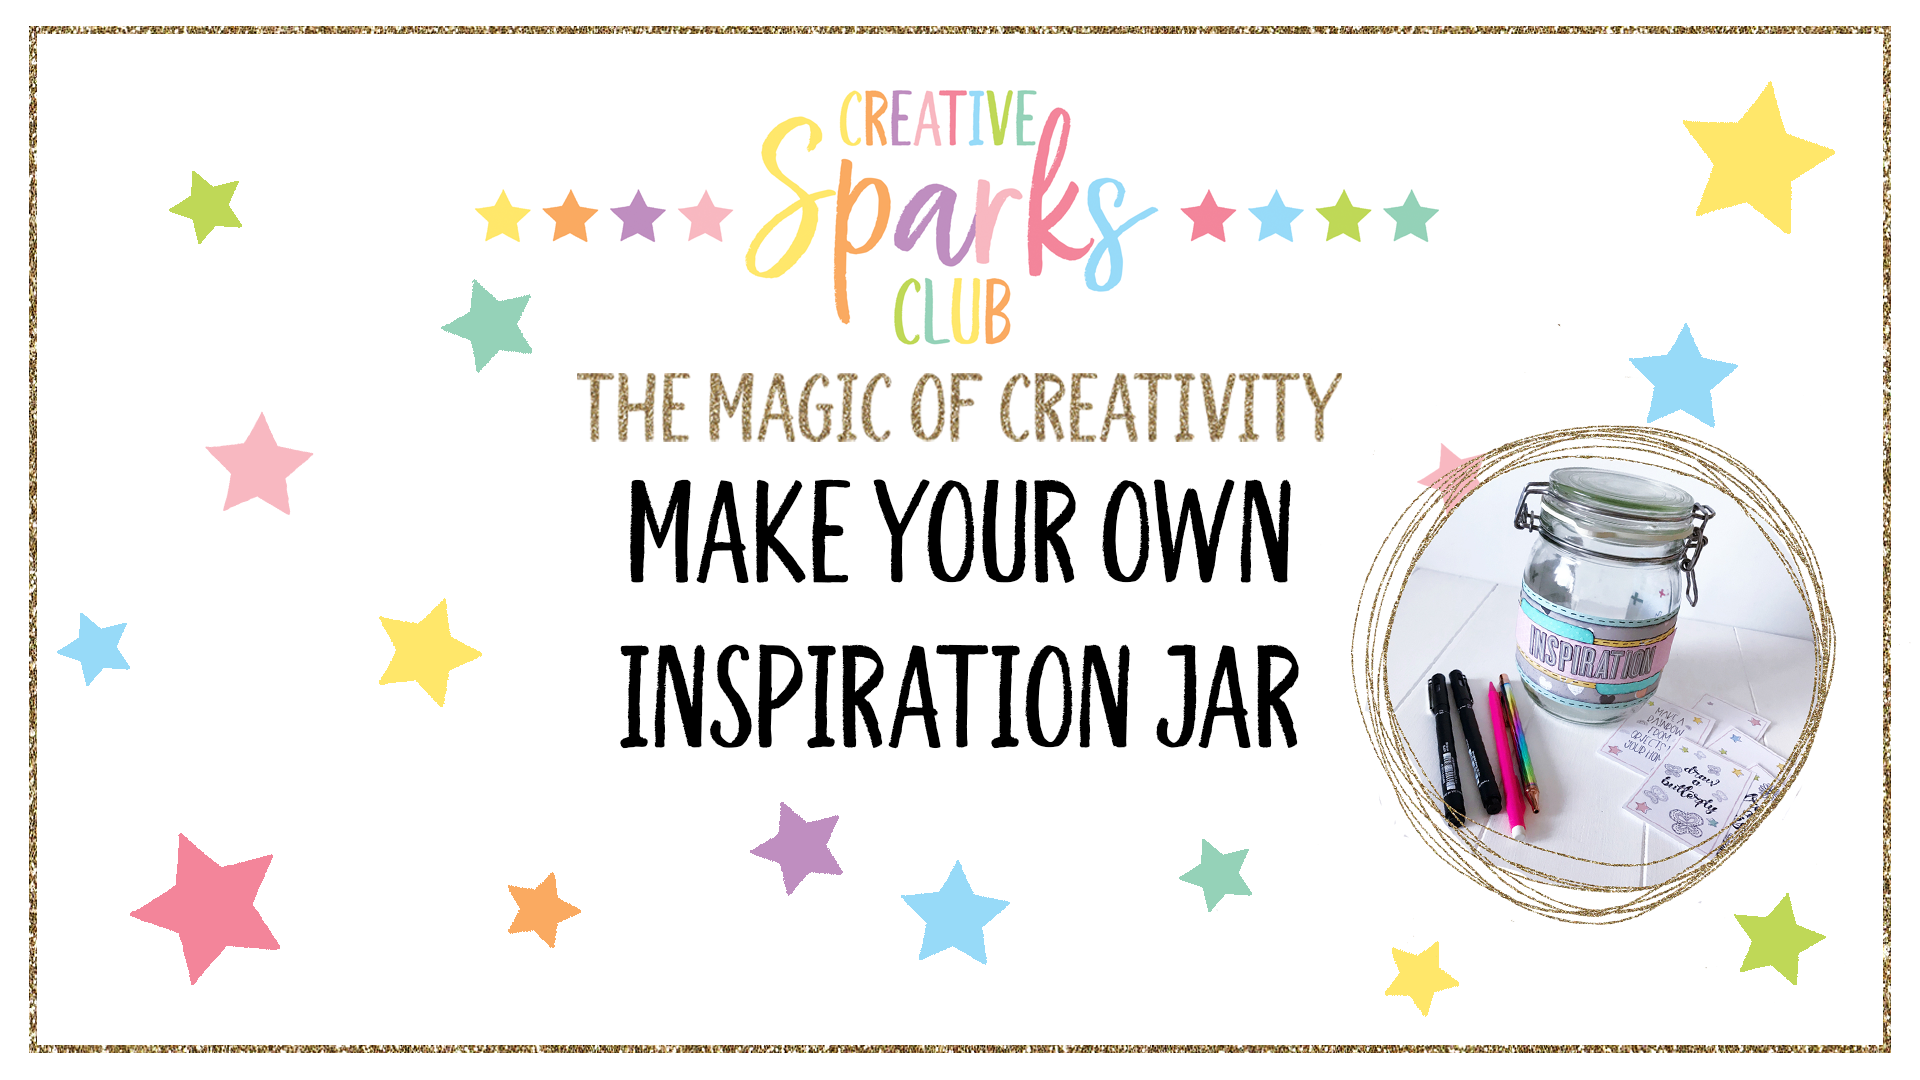 MAKE YOUR OWN INSPIRATION JAR